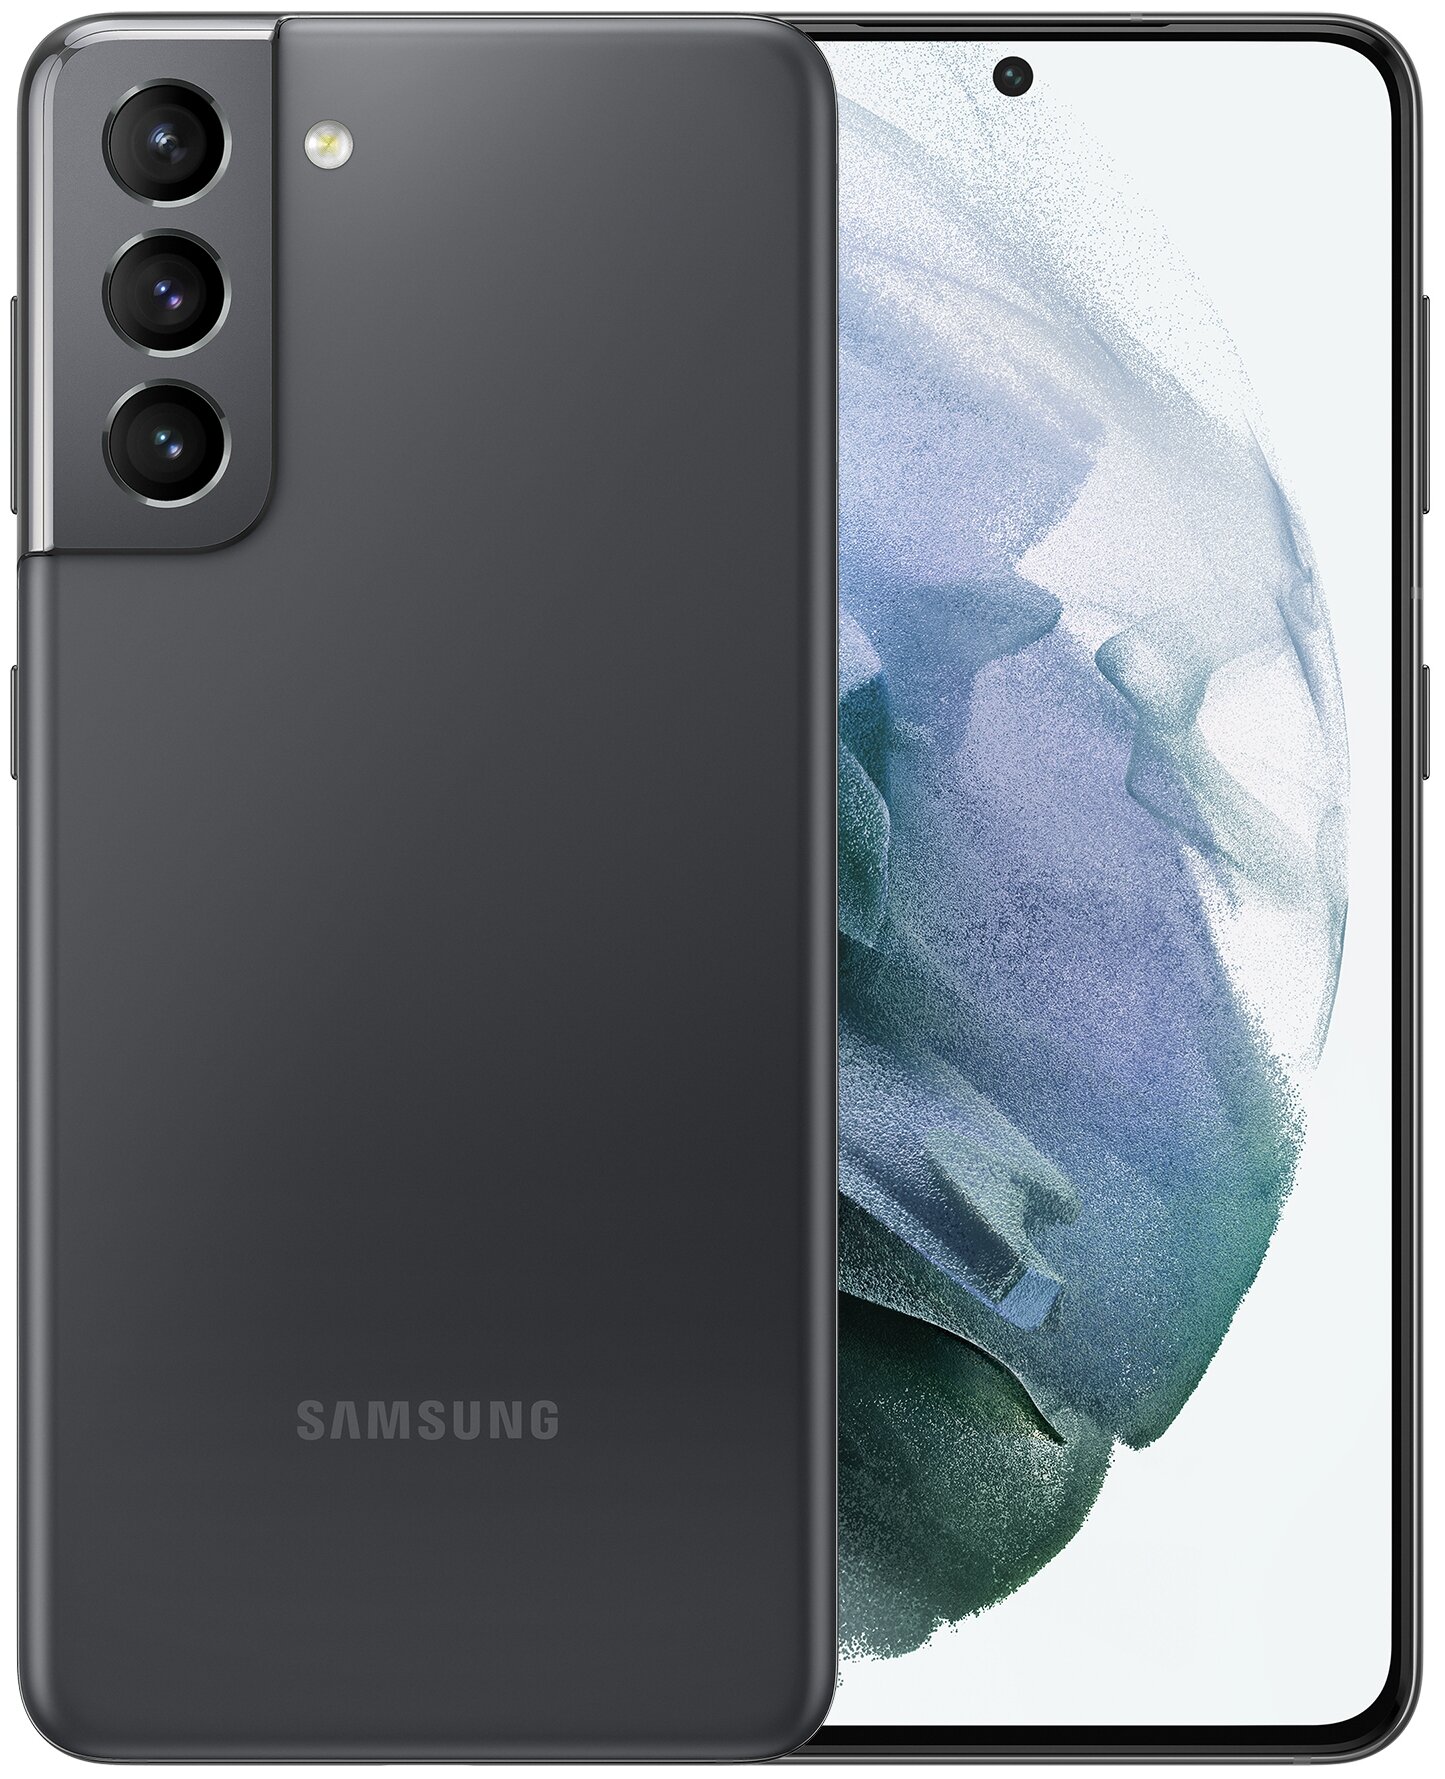 Samsung Galaxy S21 5G (SM-G991B) - экран: 6.2" (2400x1080) Dynamic AMOLED 2X 120 Гц